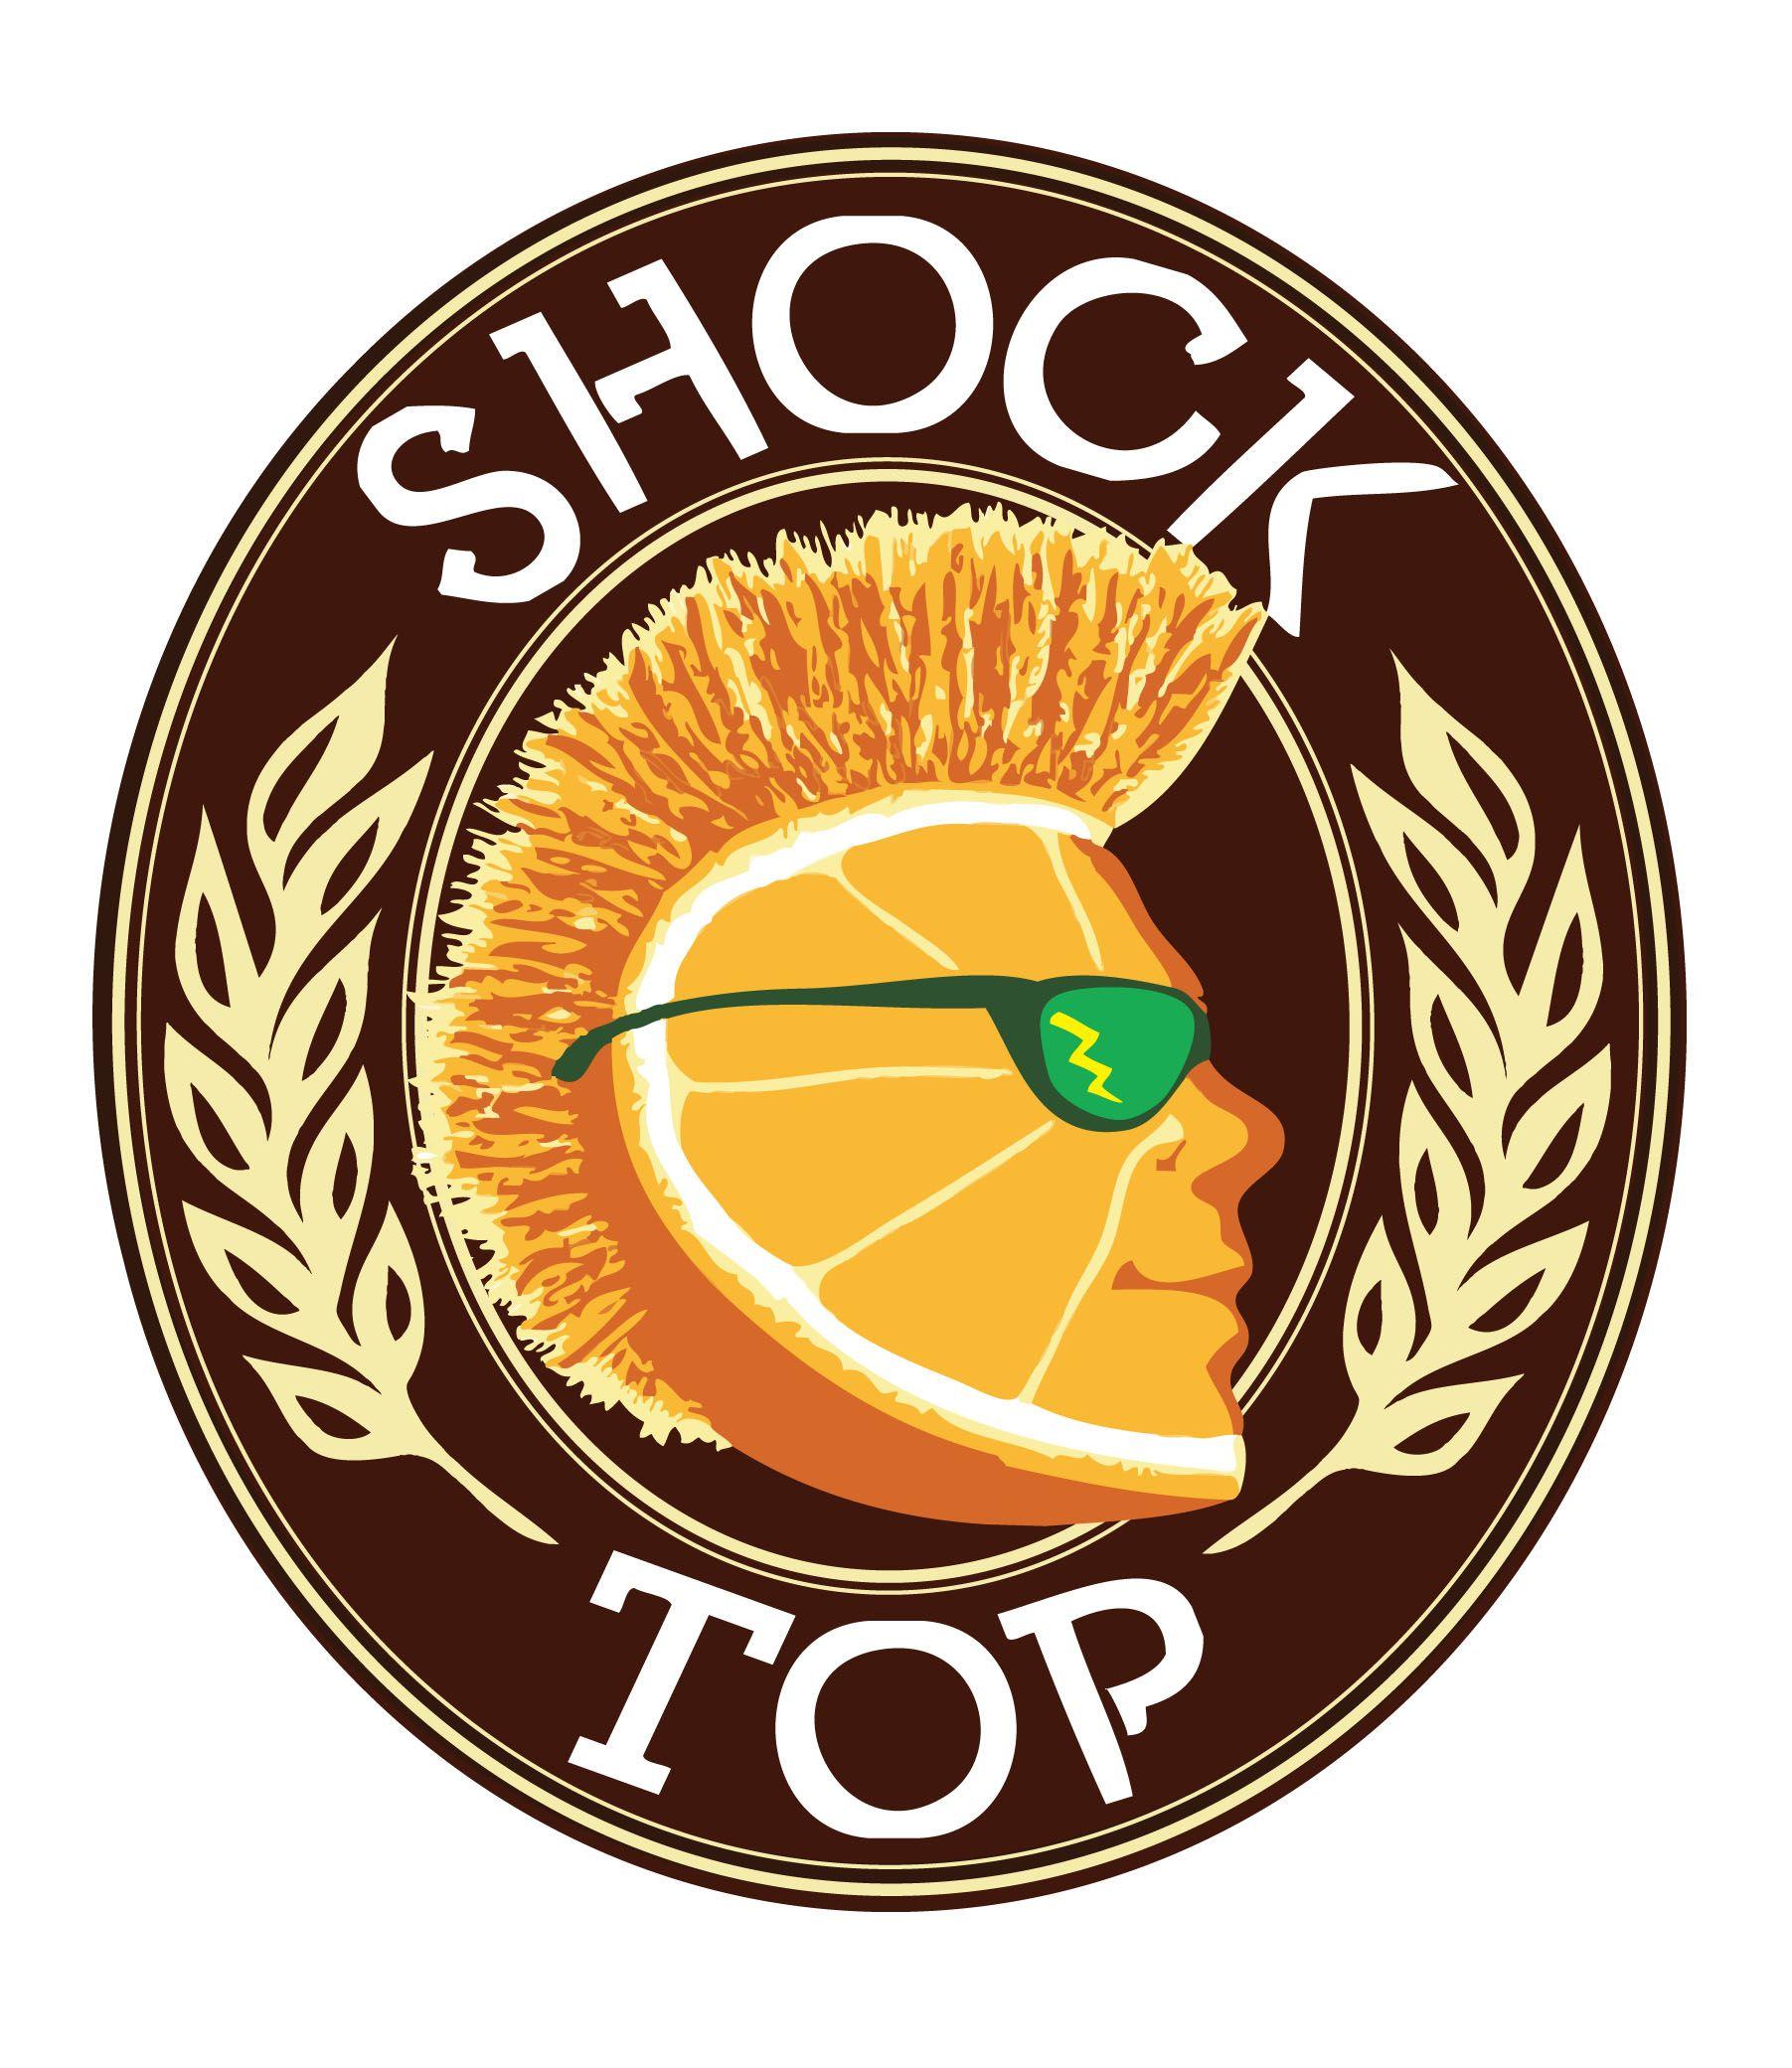 Shock Top Beer Logo - Shock top beer Logos